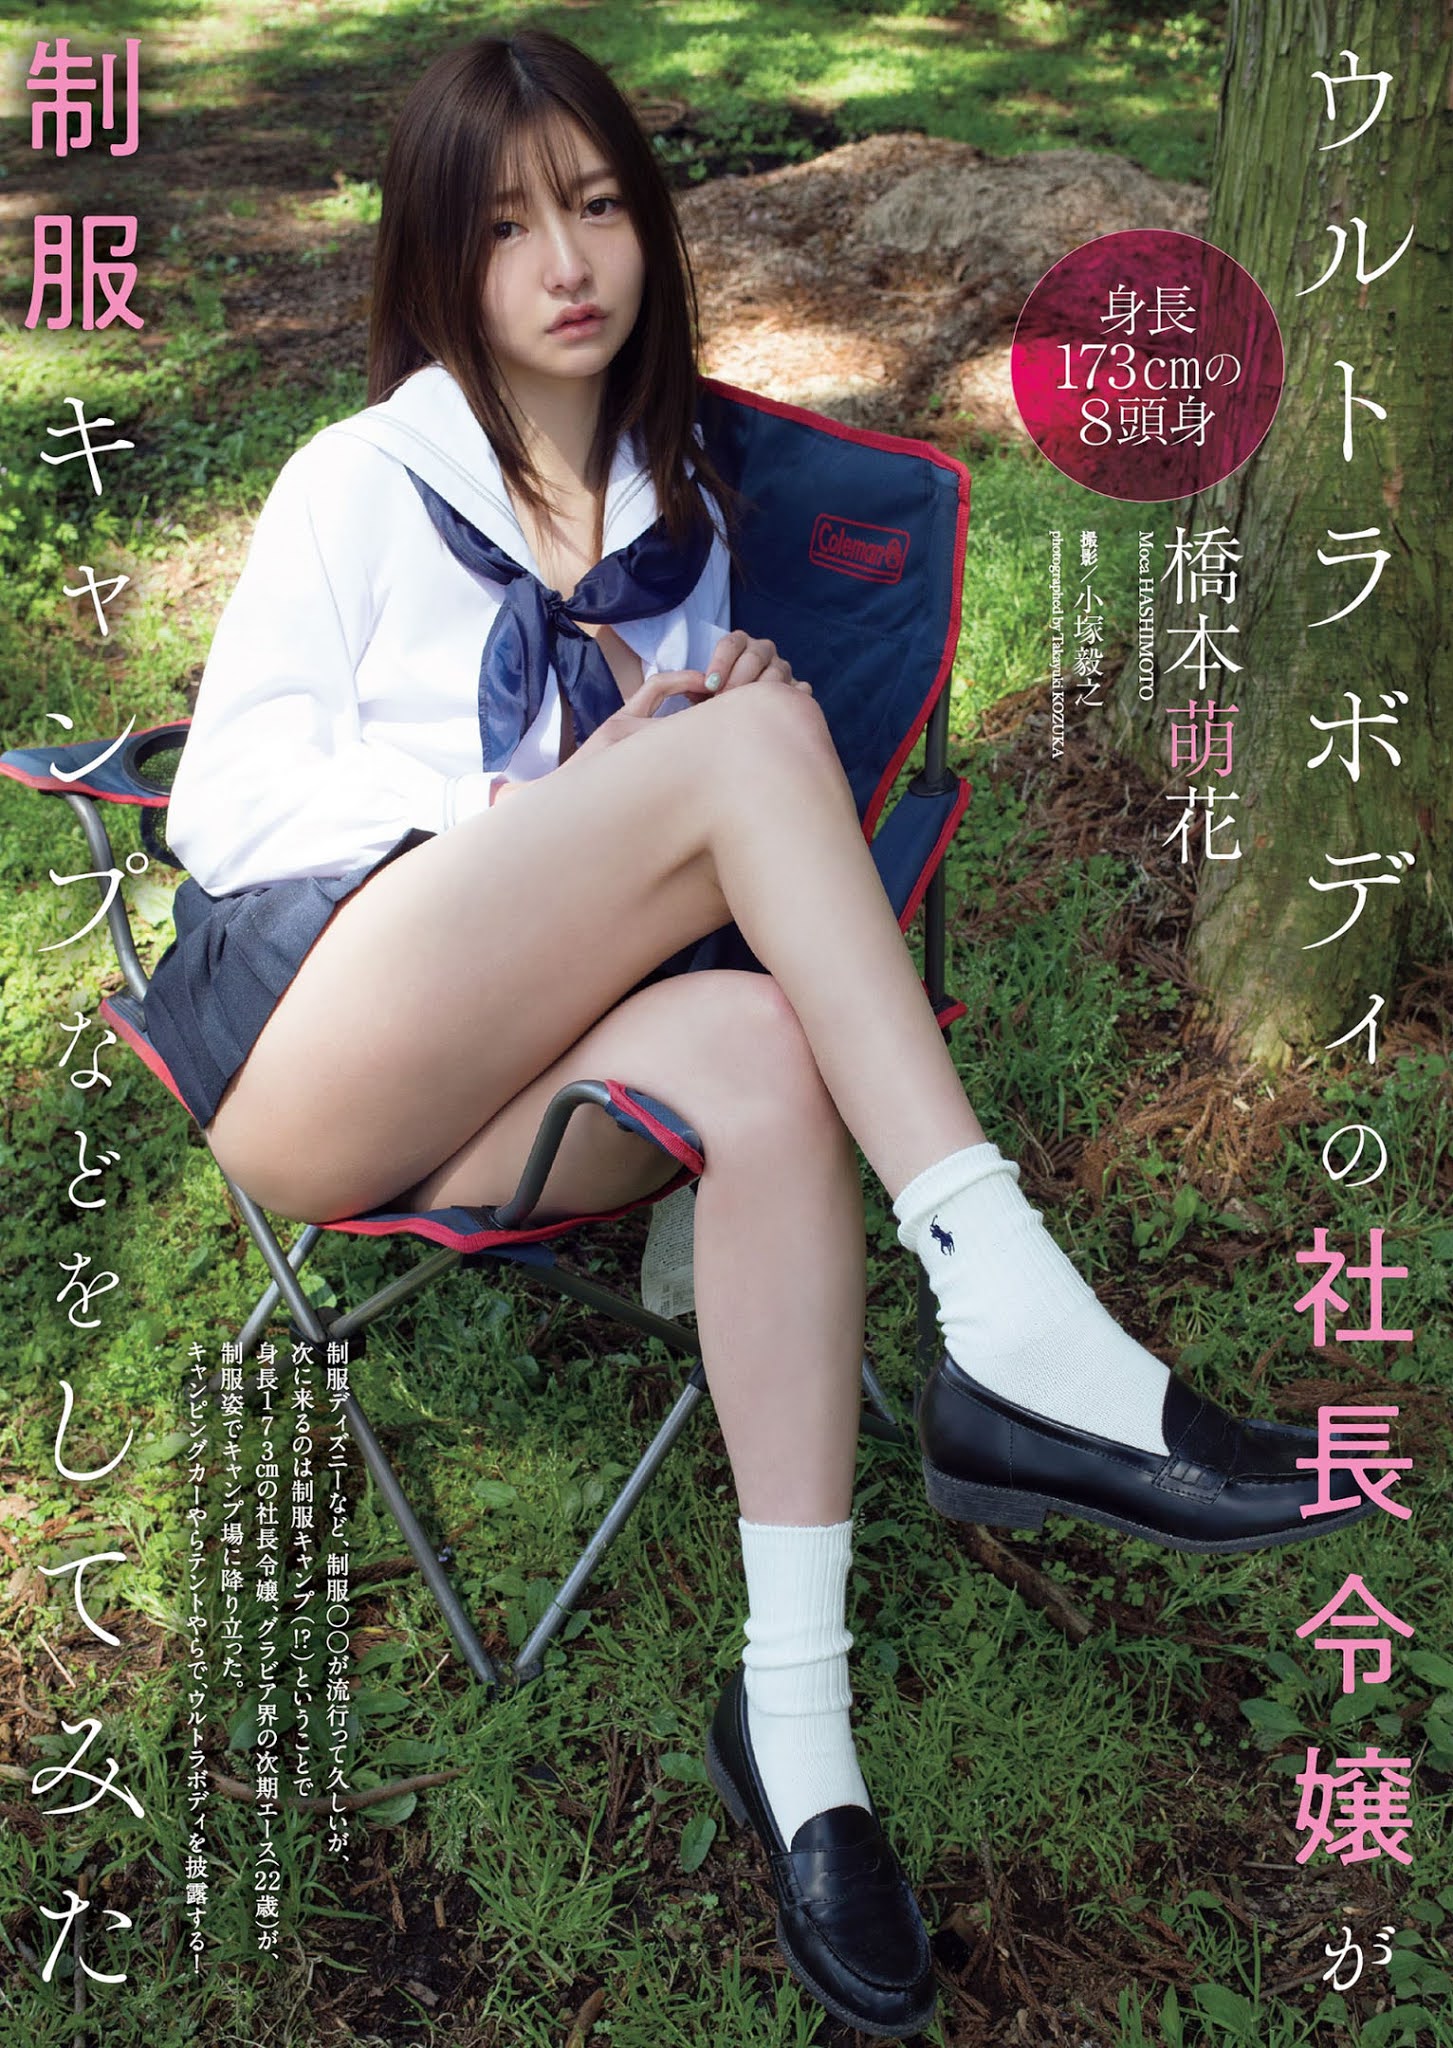 Moca Hashimoto 橋本萌花, Weekly Playboy 2021 No.19-20 (週刊プレイボーイ 2021年19-20号)